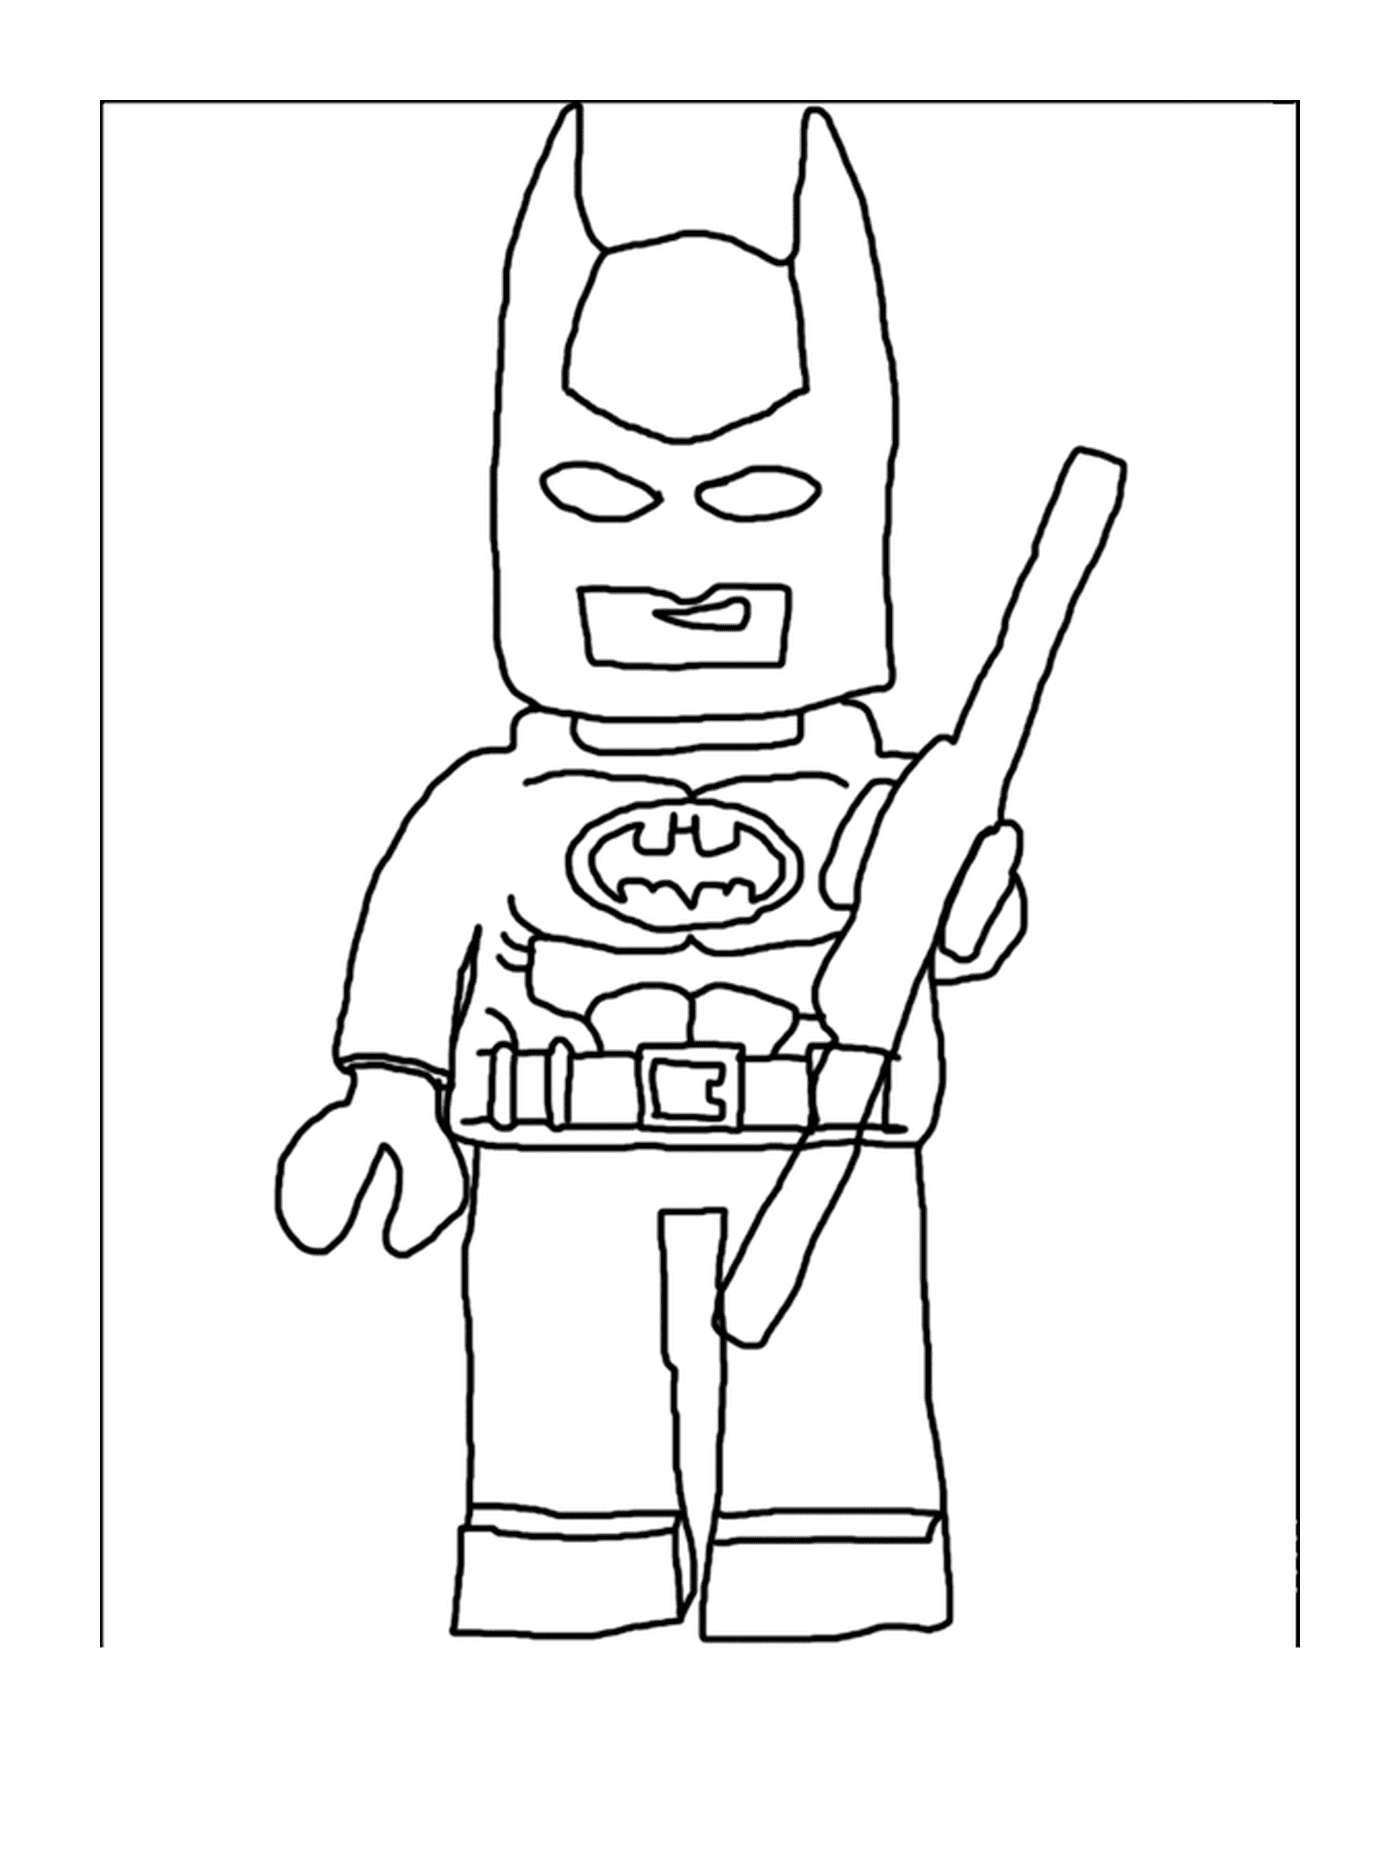  前面的蝙蝠侠Lego 